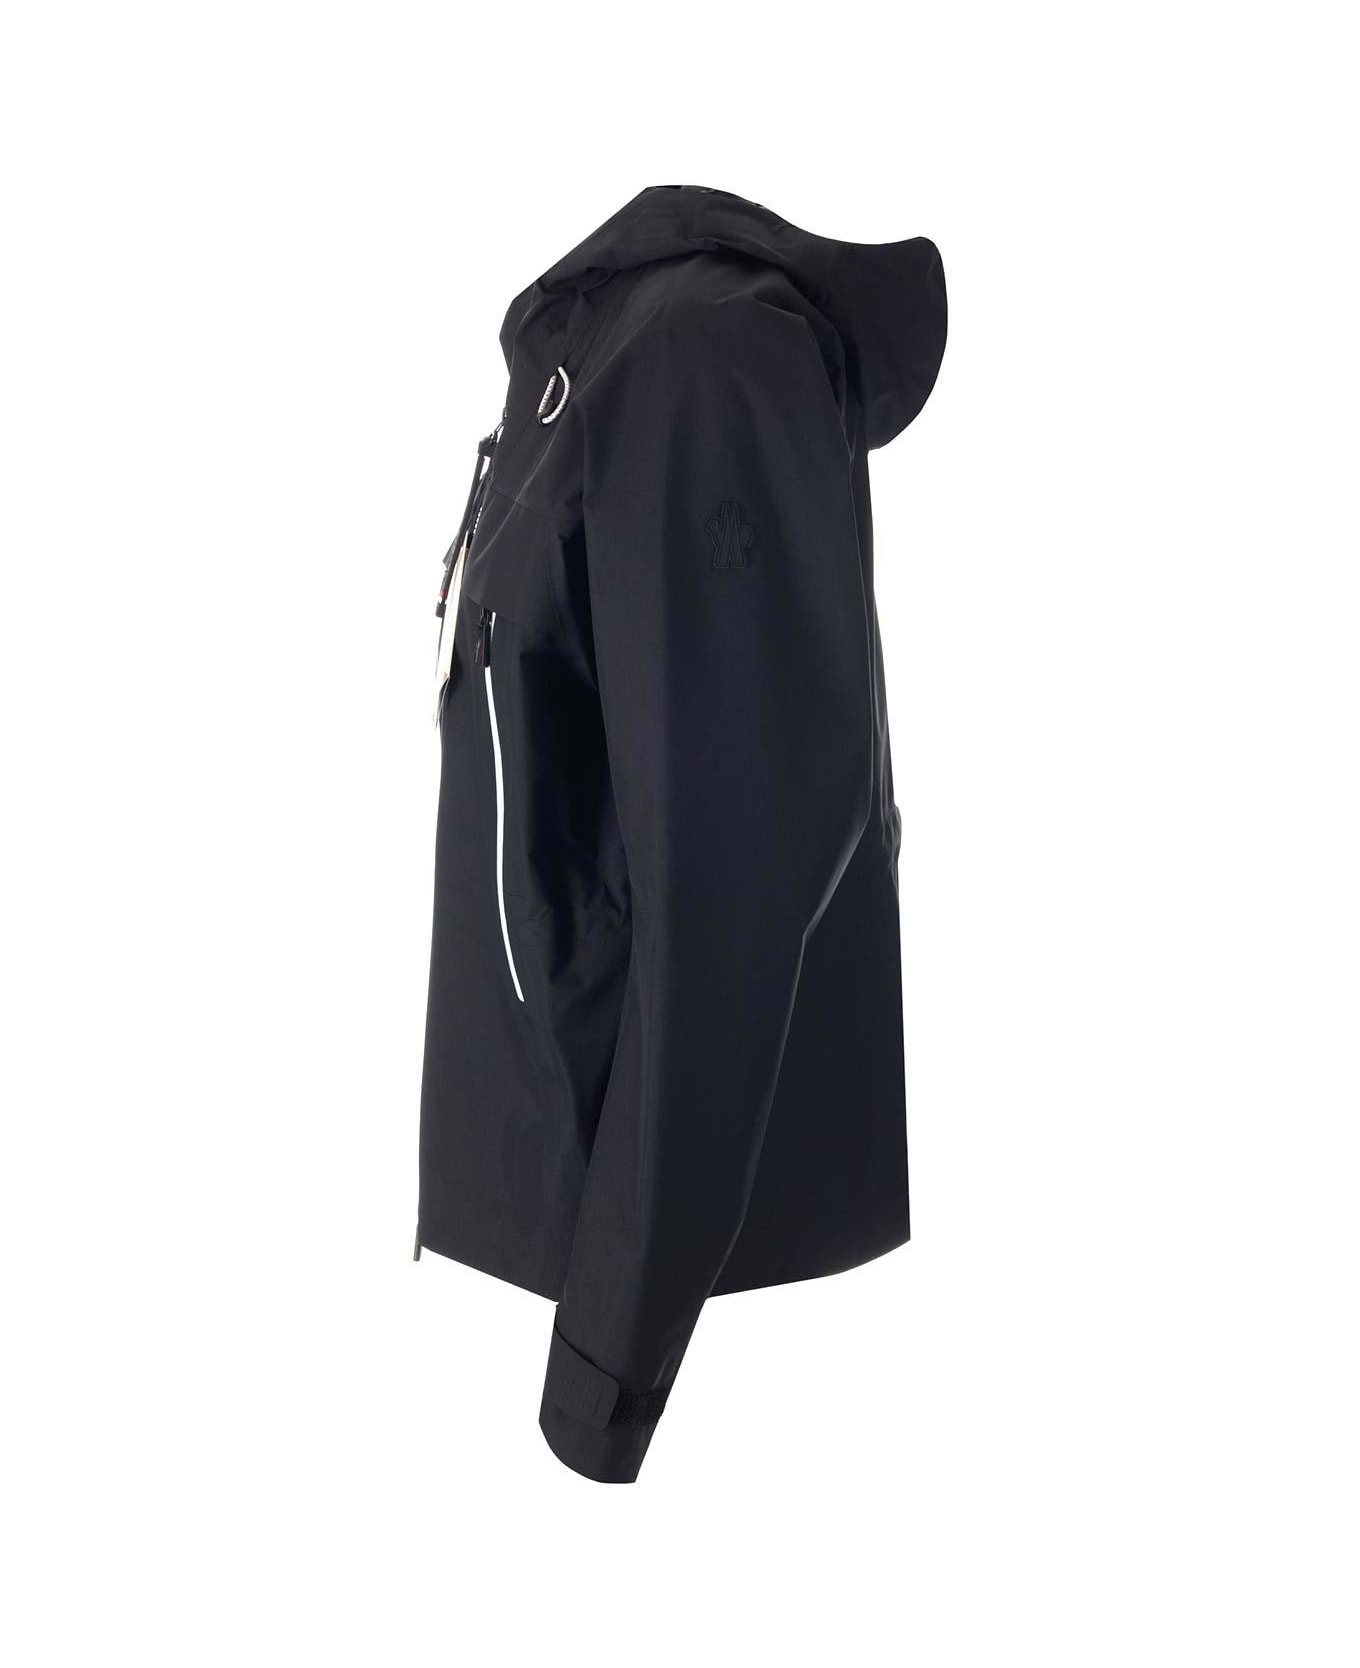 Moncler Grenoble Zip-up Hooded Jacket - 999 ジャケット